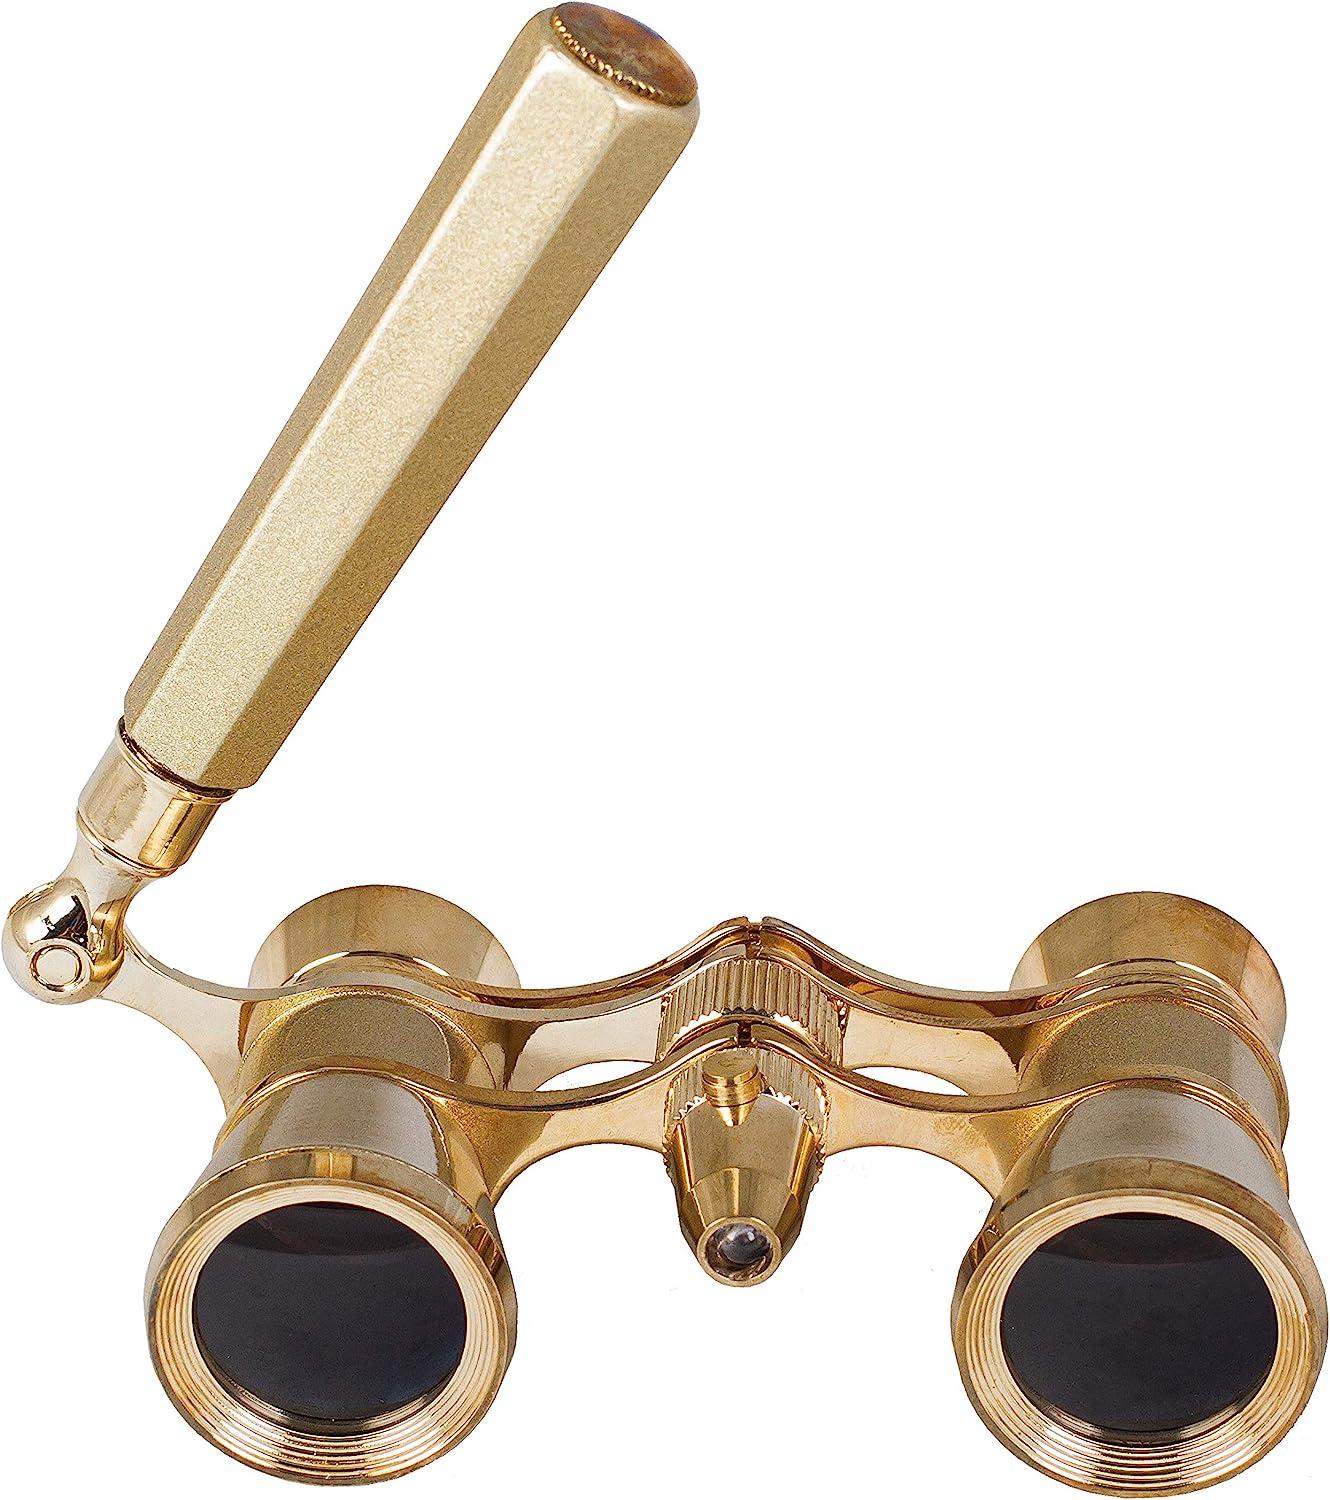 Levenhuk Broadway 325N Opera Glasses (Gold Theater Binoculars with